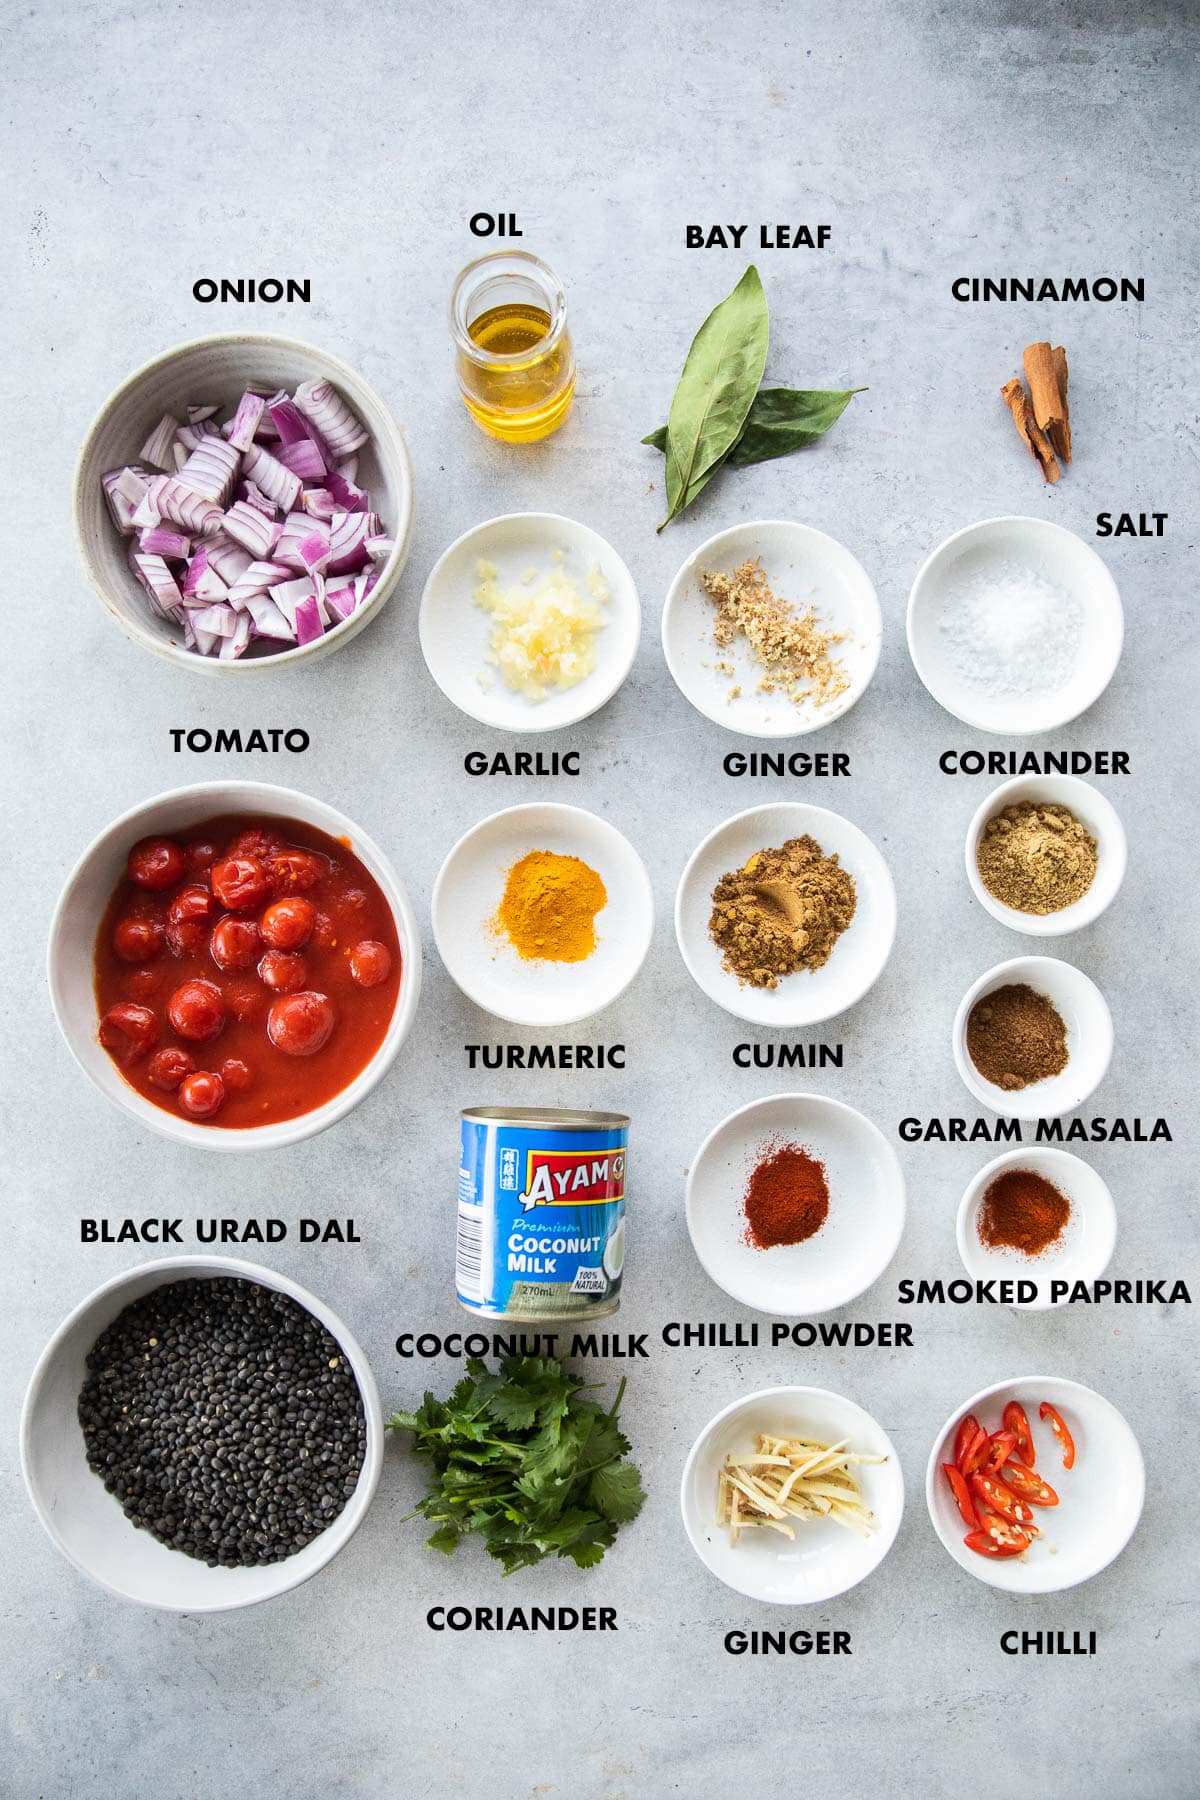 Vegan Dal Makhani ingredients labeled - onion, tomato, ginger, garlic, black urad dal, coconut milk, oil, bay leaf, cinnamon, turmeric, cumin, coriander, garam masala, chilli powder, smoked paprika and salt.